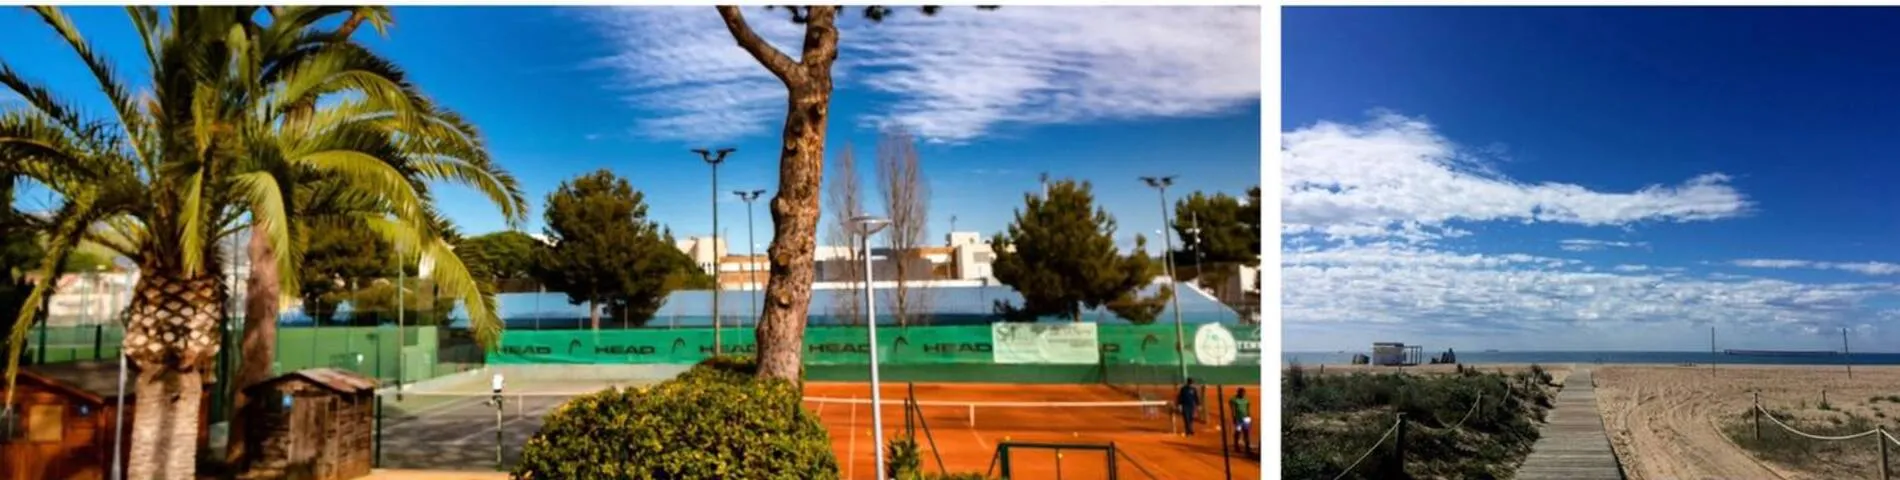 Barcelona Tennis Academy bild 1